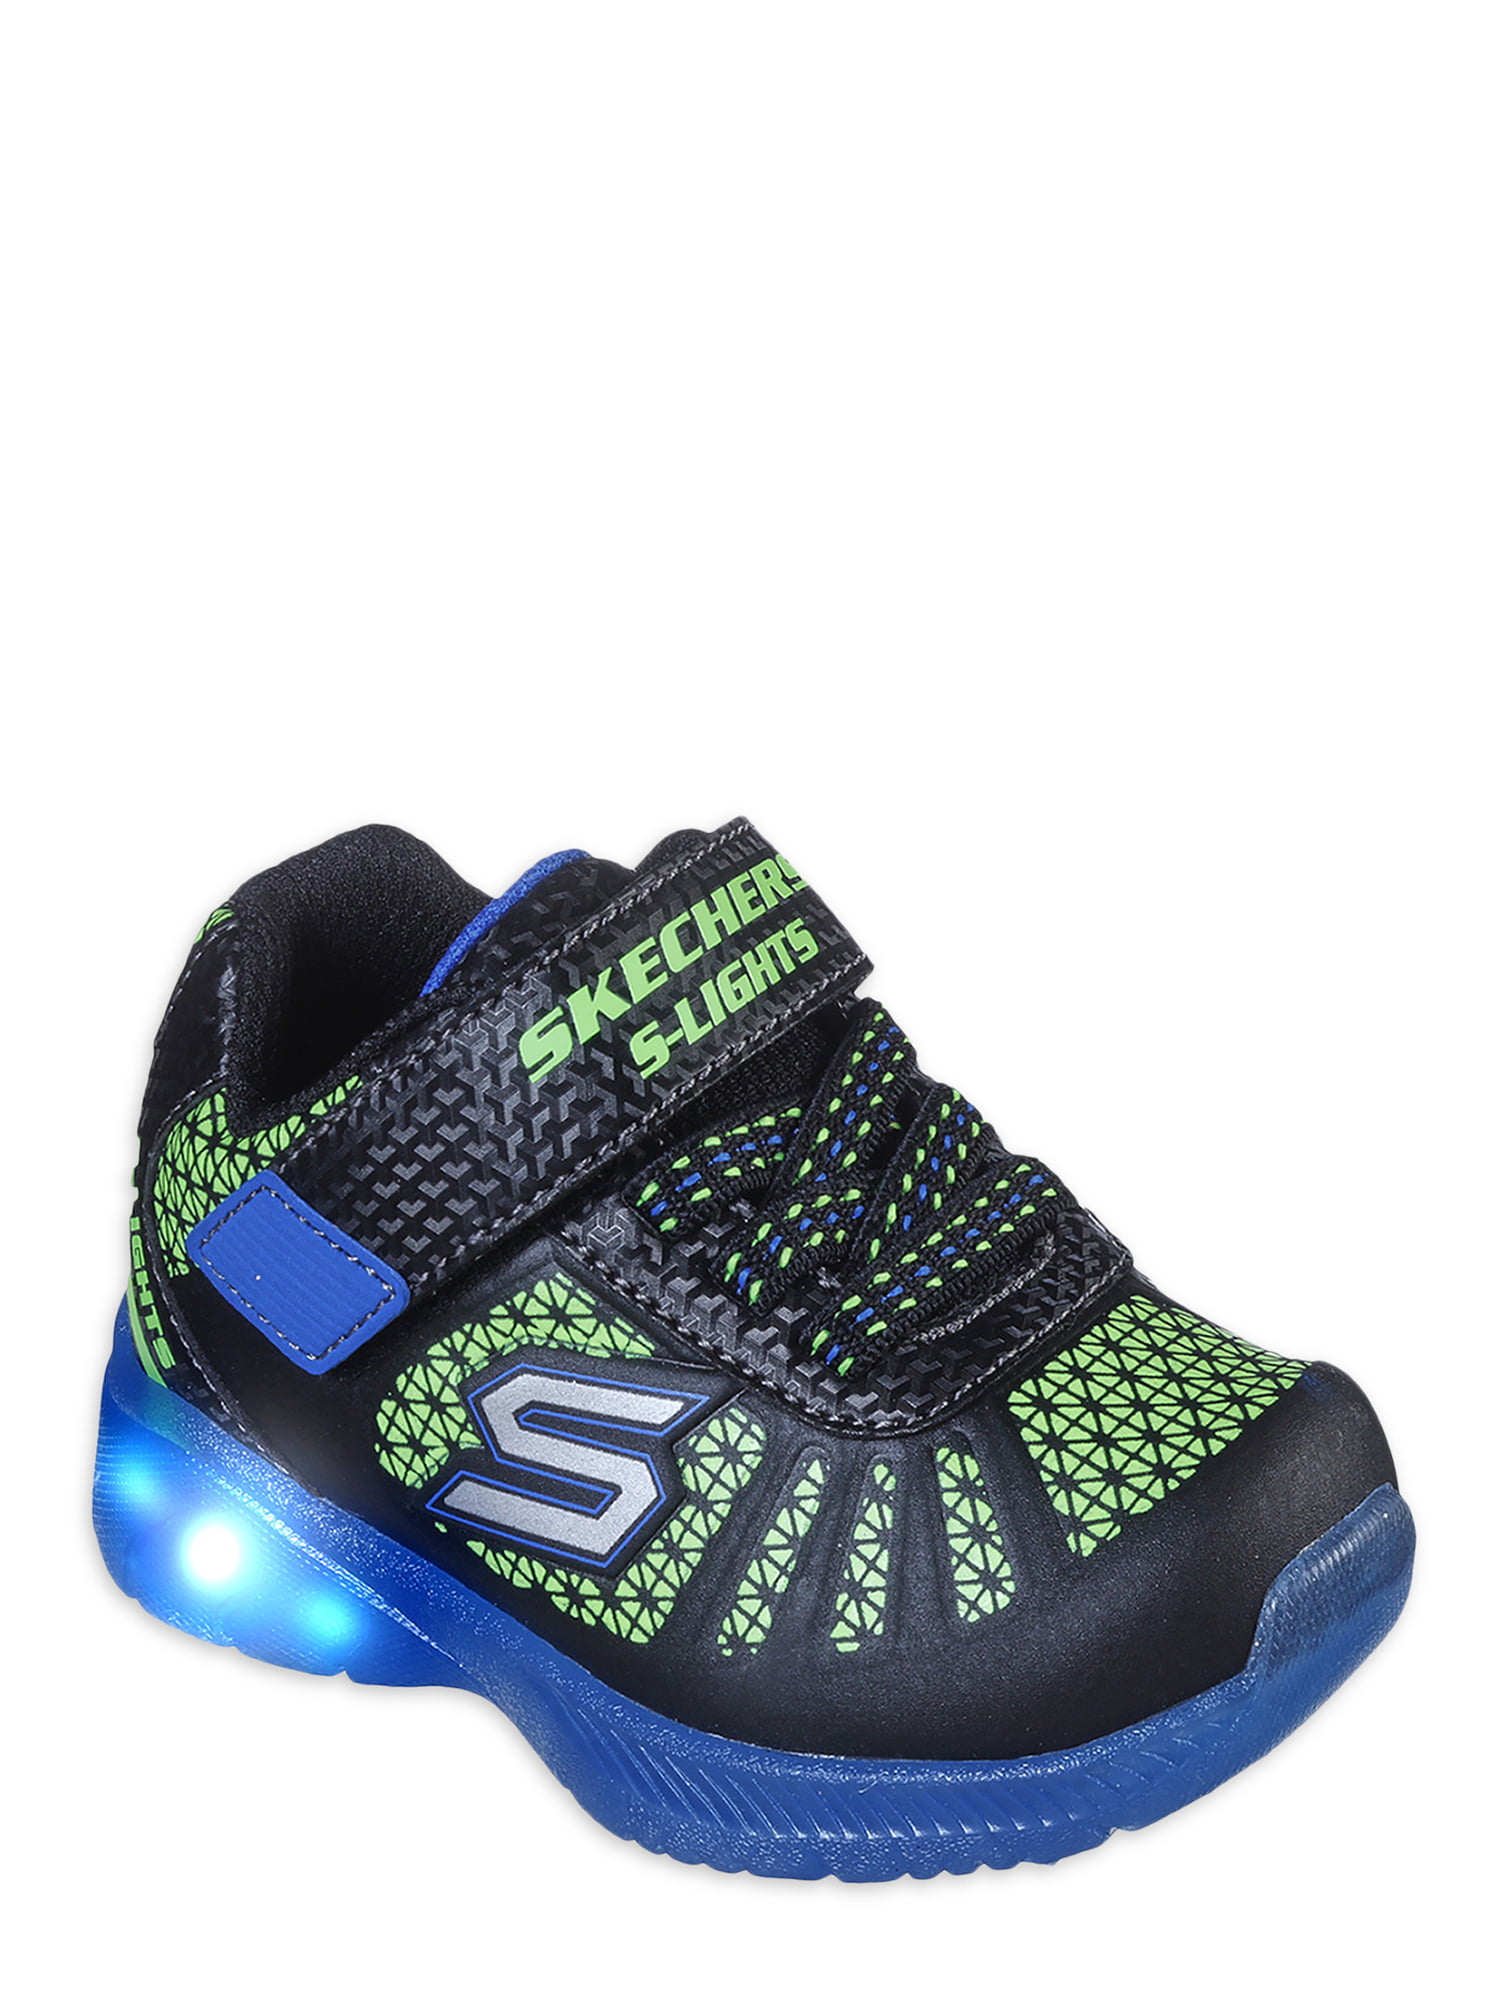 Skechers Illumi Lighted Athletic Sneakers (Toddler Boy) Walmart.com